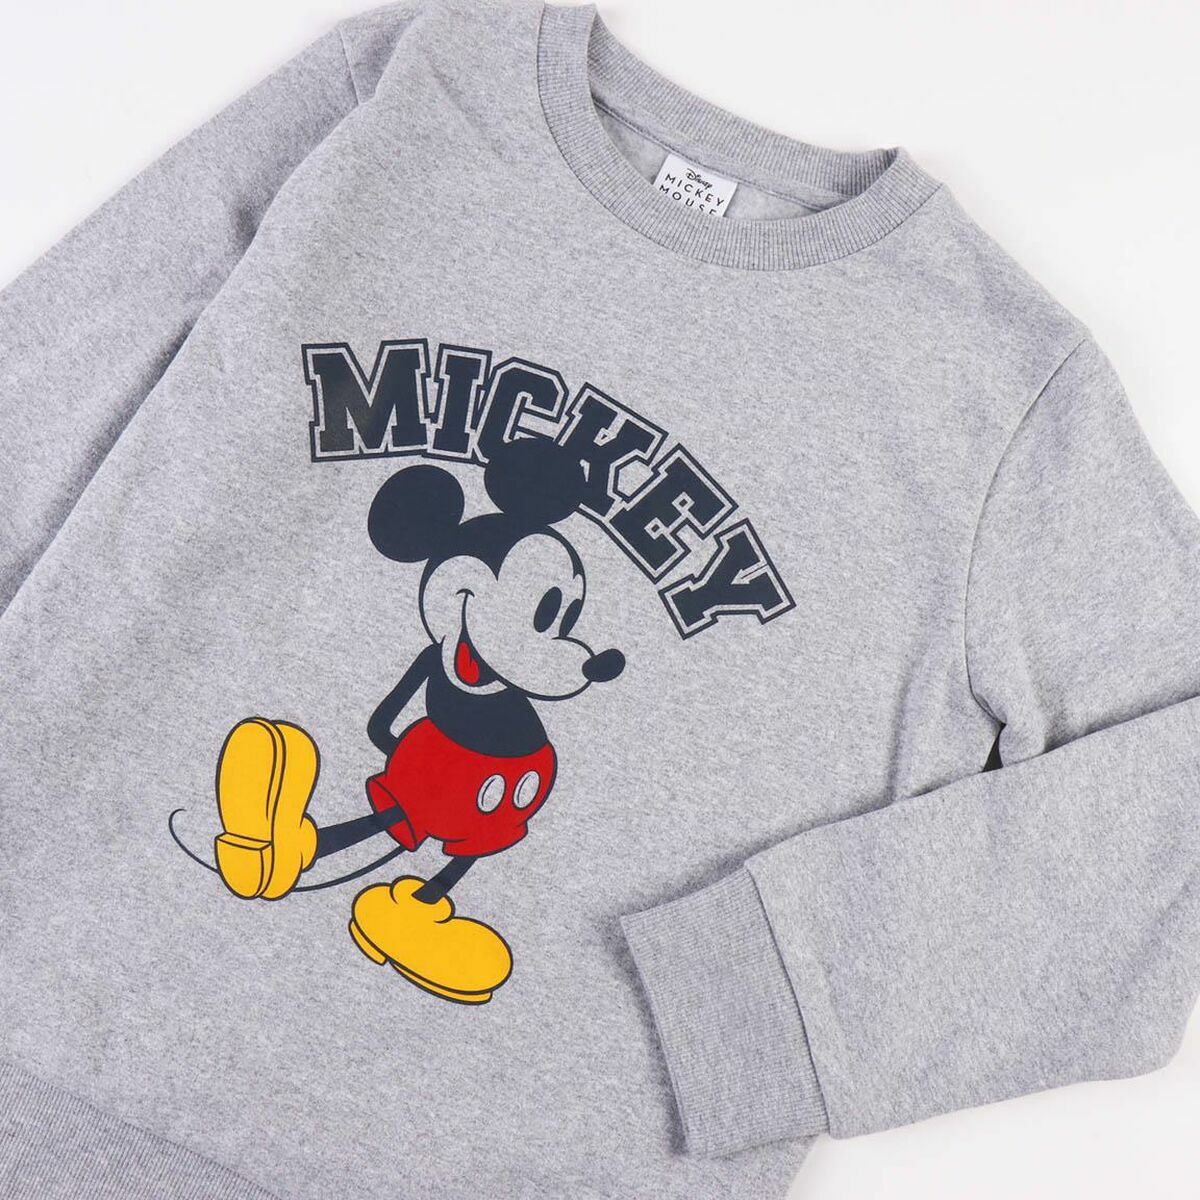 Kindersweater zonder Capuchon Mickey Mouse Grijs